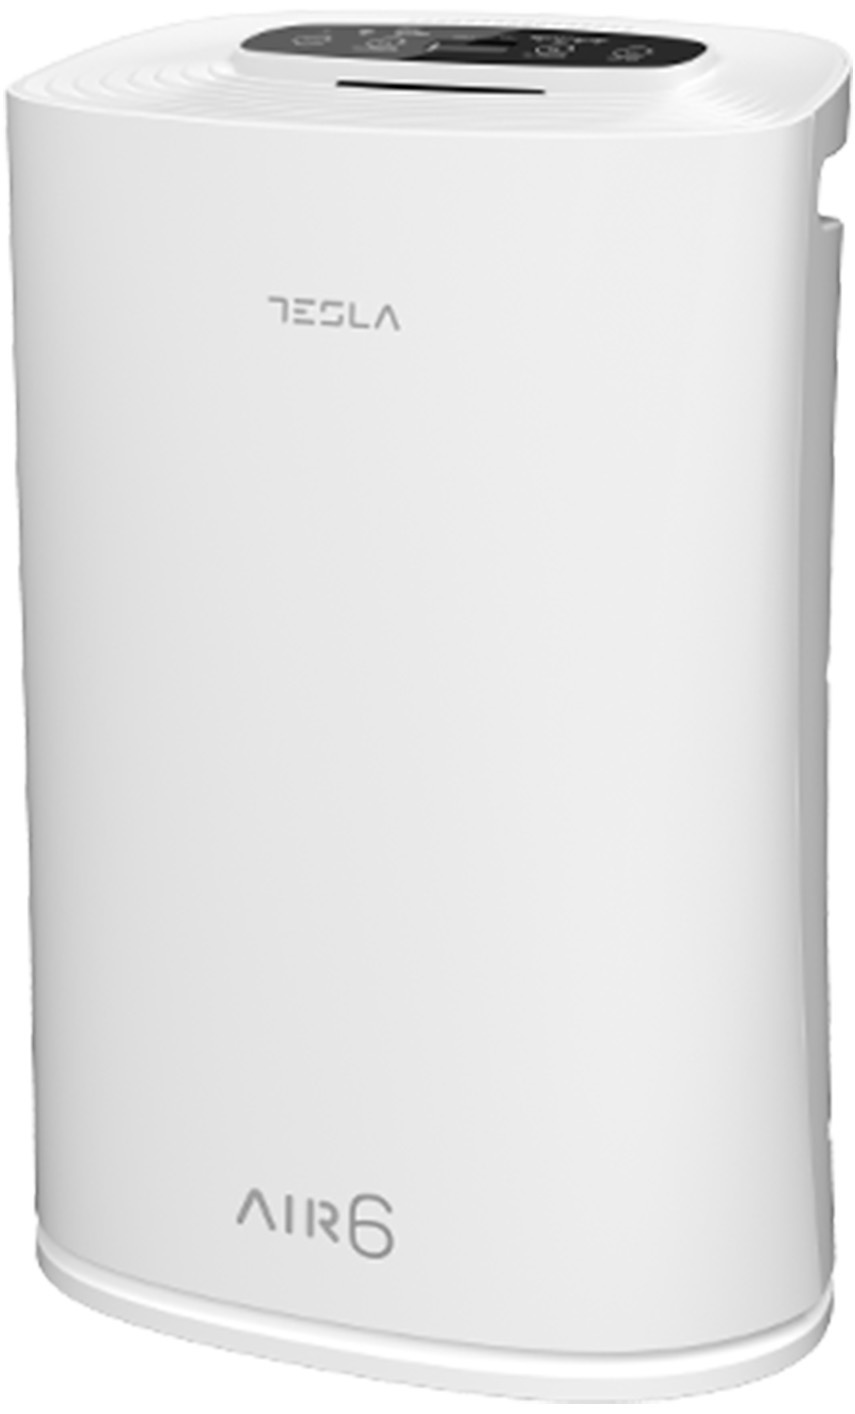 Purificator de aer Tesla TAPA6 Air6, 300 m3/h, Rezervor 0.25 l, Senzor calitate aer, WiFi, Umidificator, Timer, Filtru HEPA, Alb